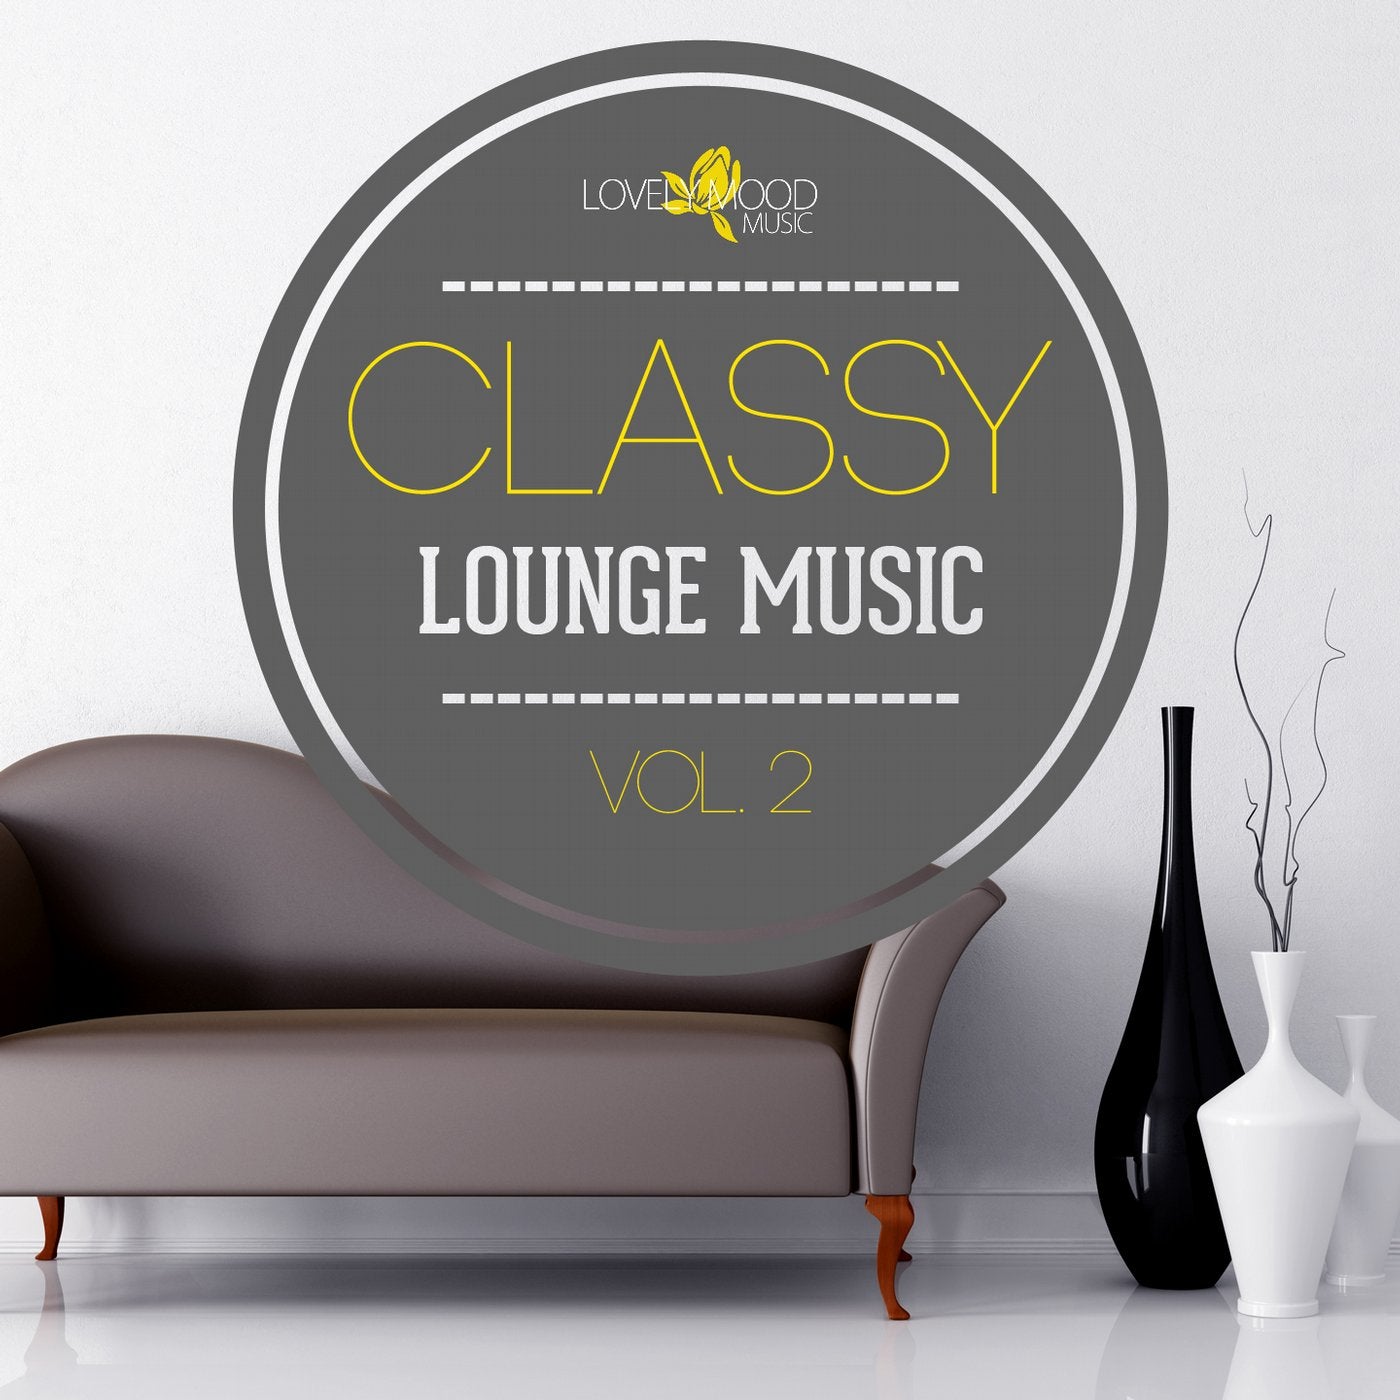 Classy Lounge Music Vol. 2